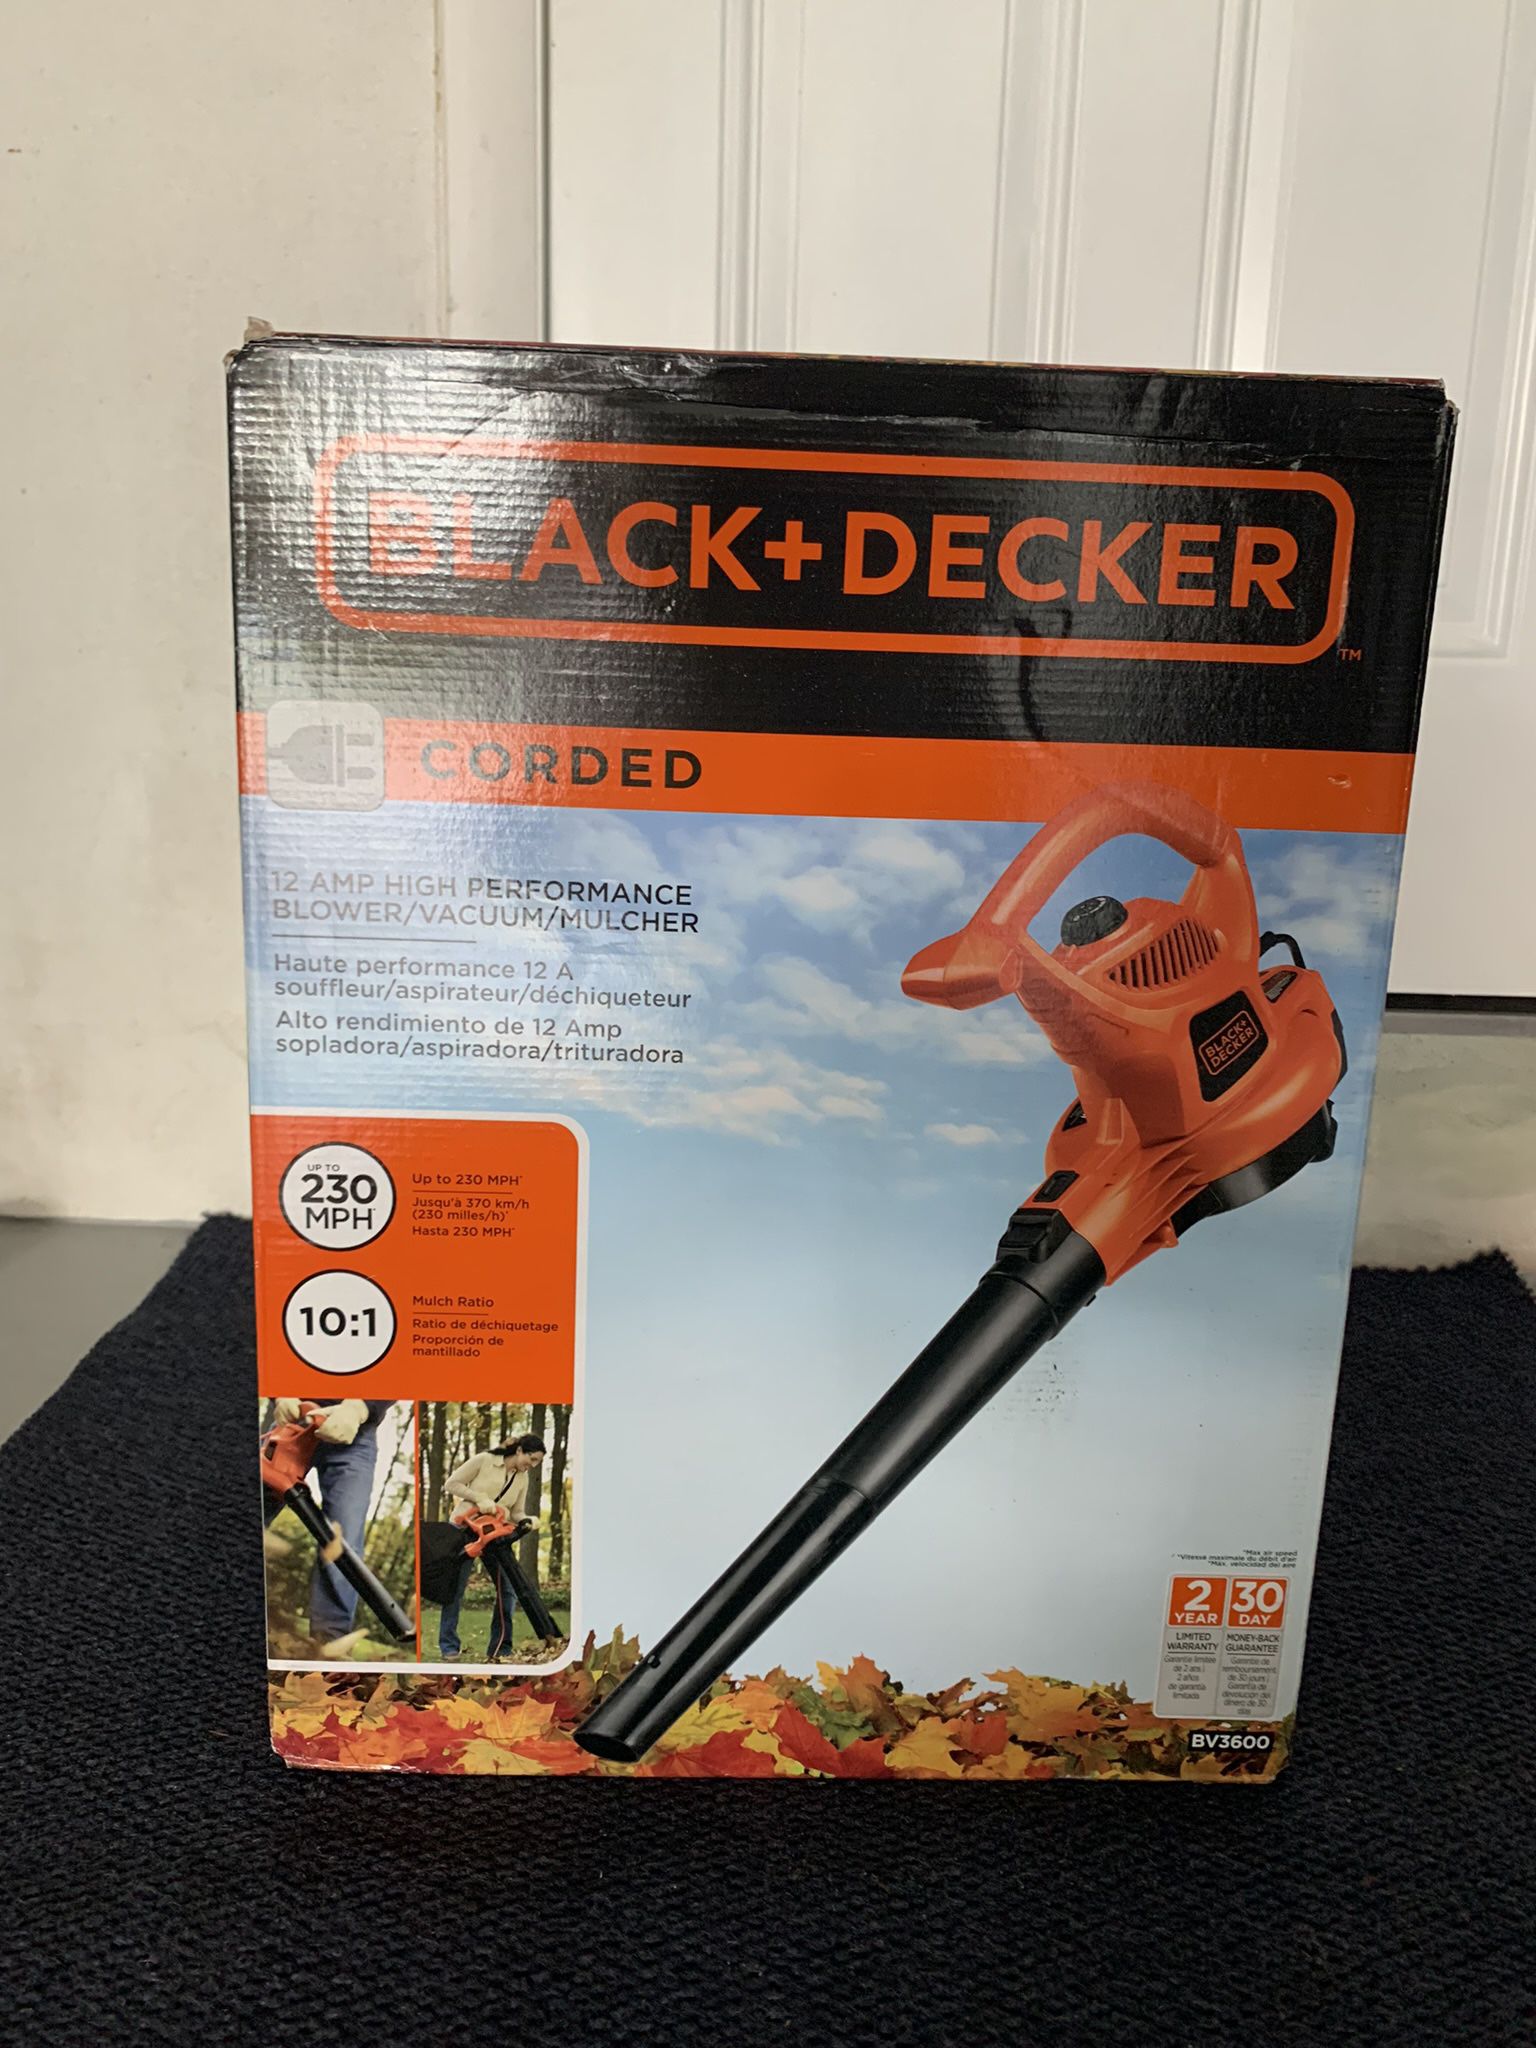 Black Decker Bv3600 Blower Vac,12A